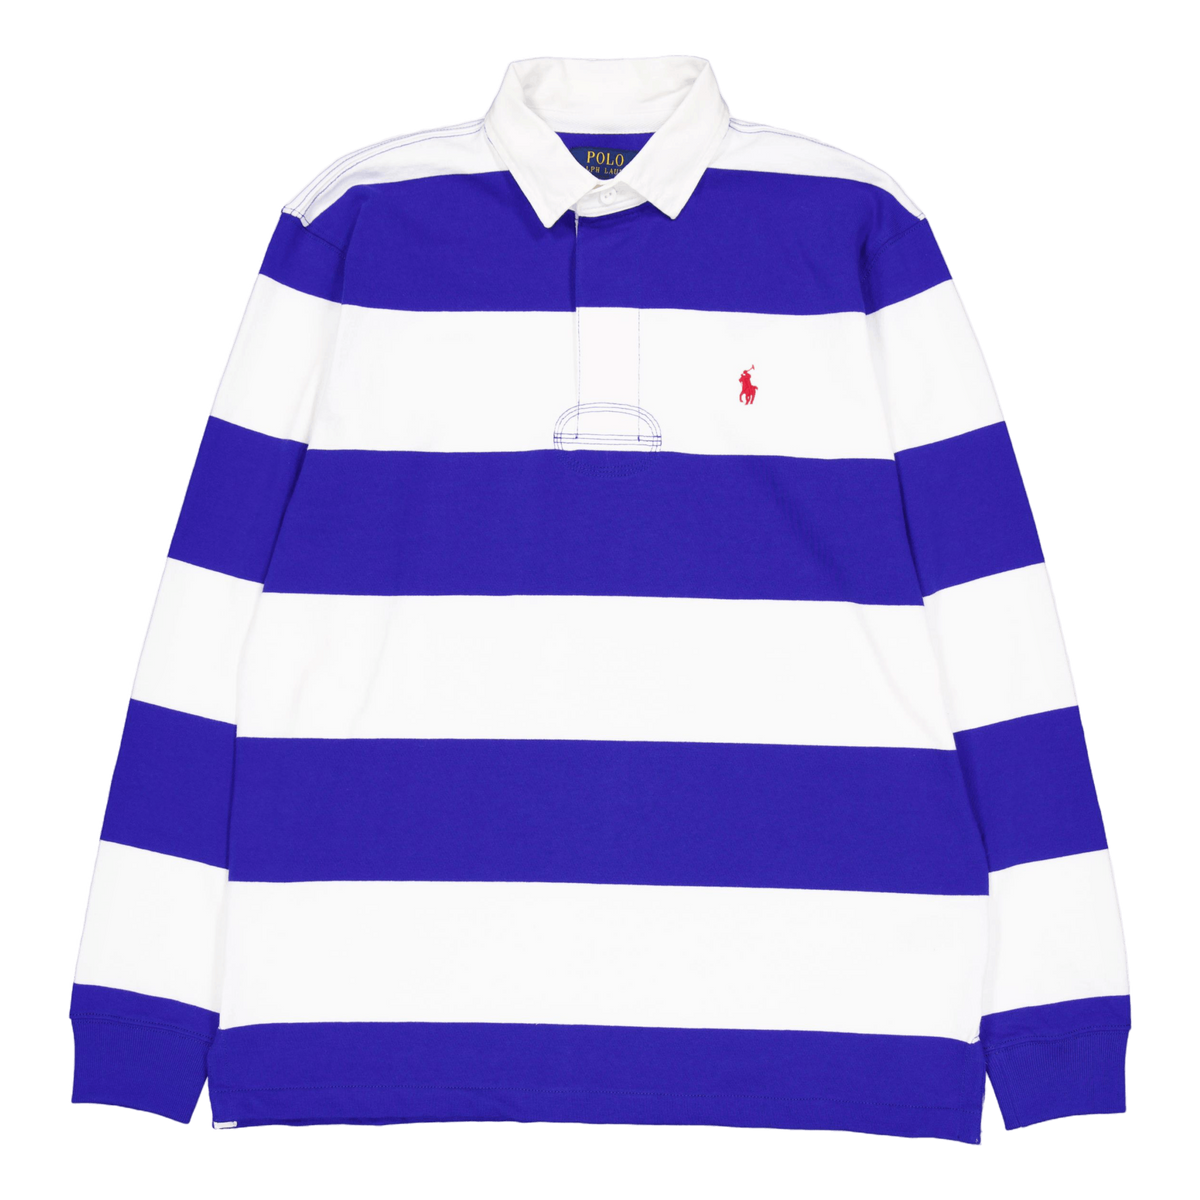 Polo Ralph Lauren Stripe Rugby Shirt Cruise